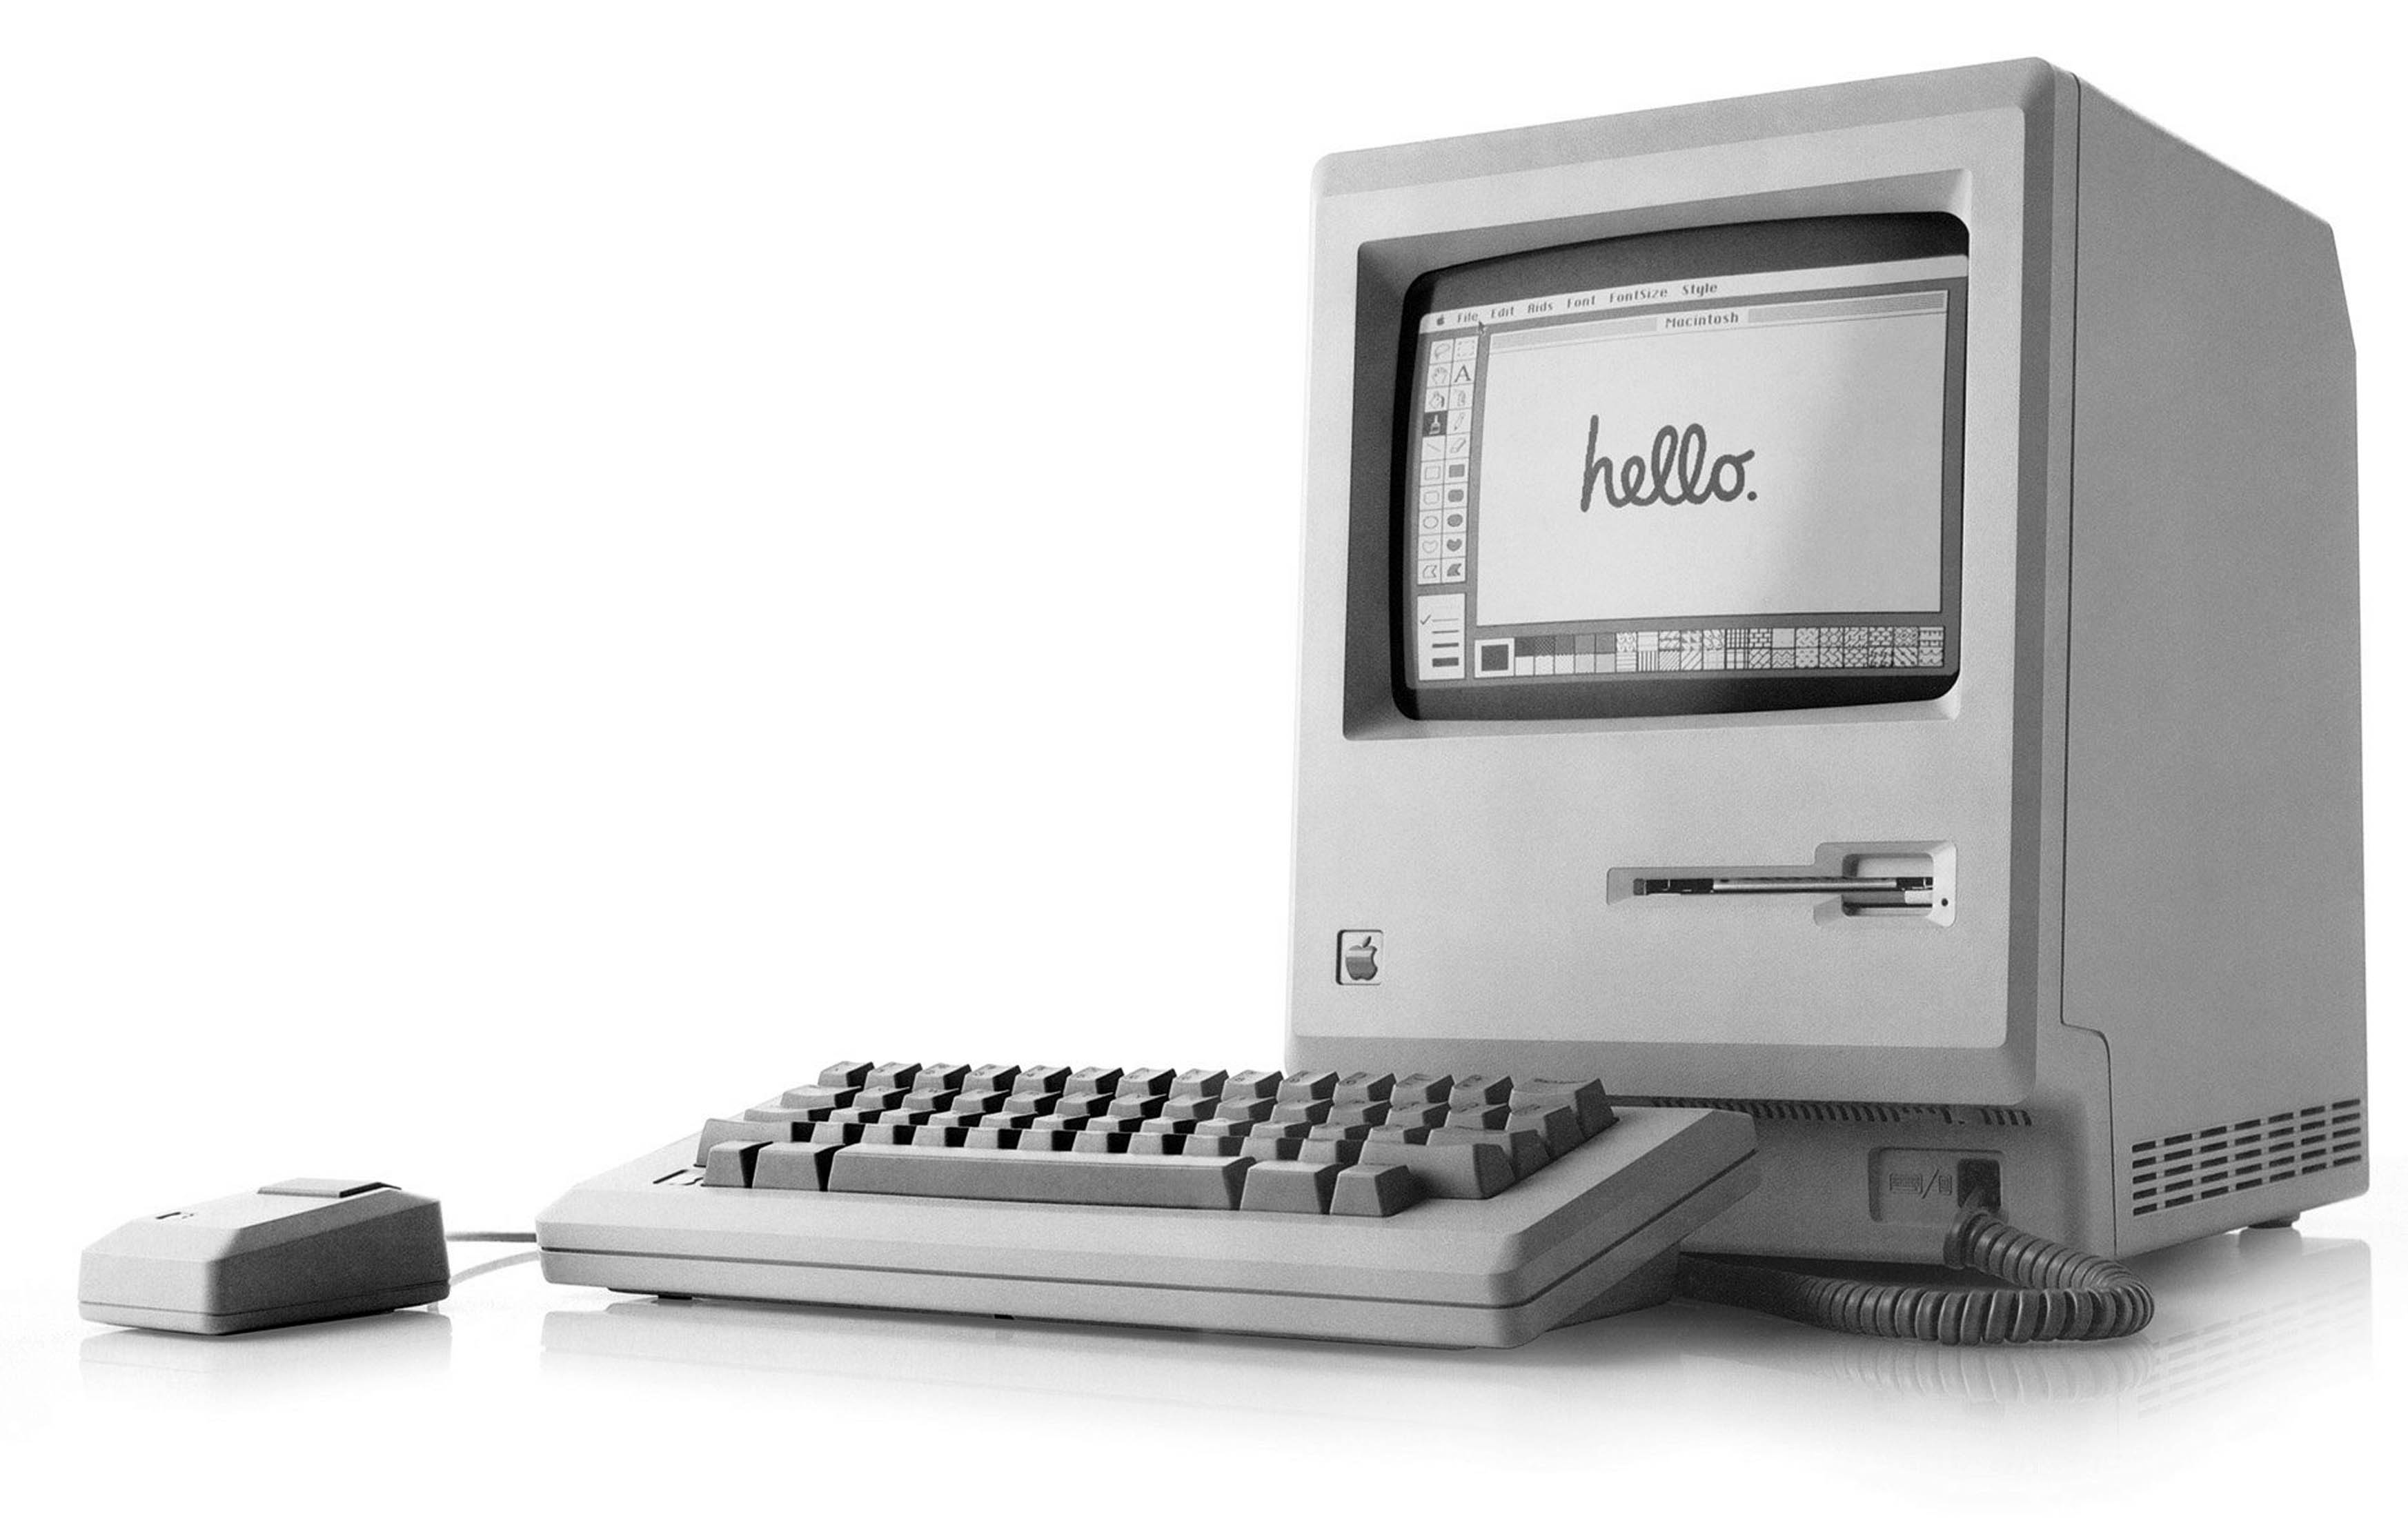 1st Apple Macintosh (Mac) 128K computer, released january 24, 1984 by Steve Jobs